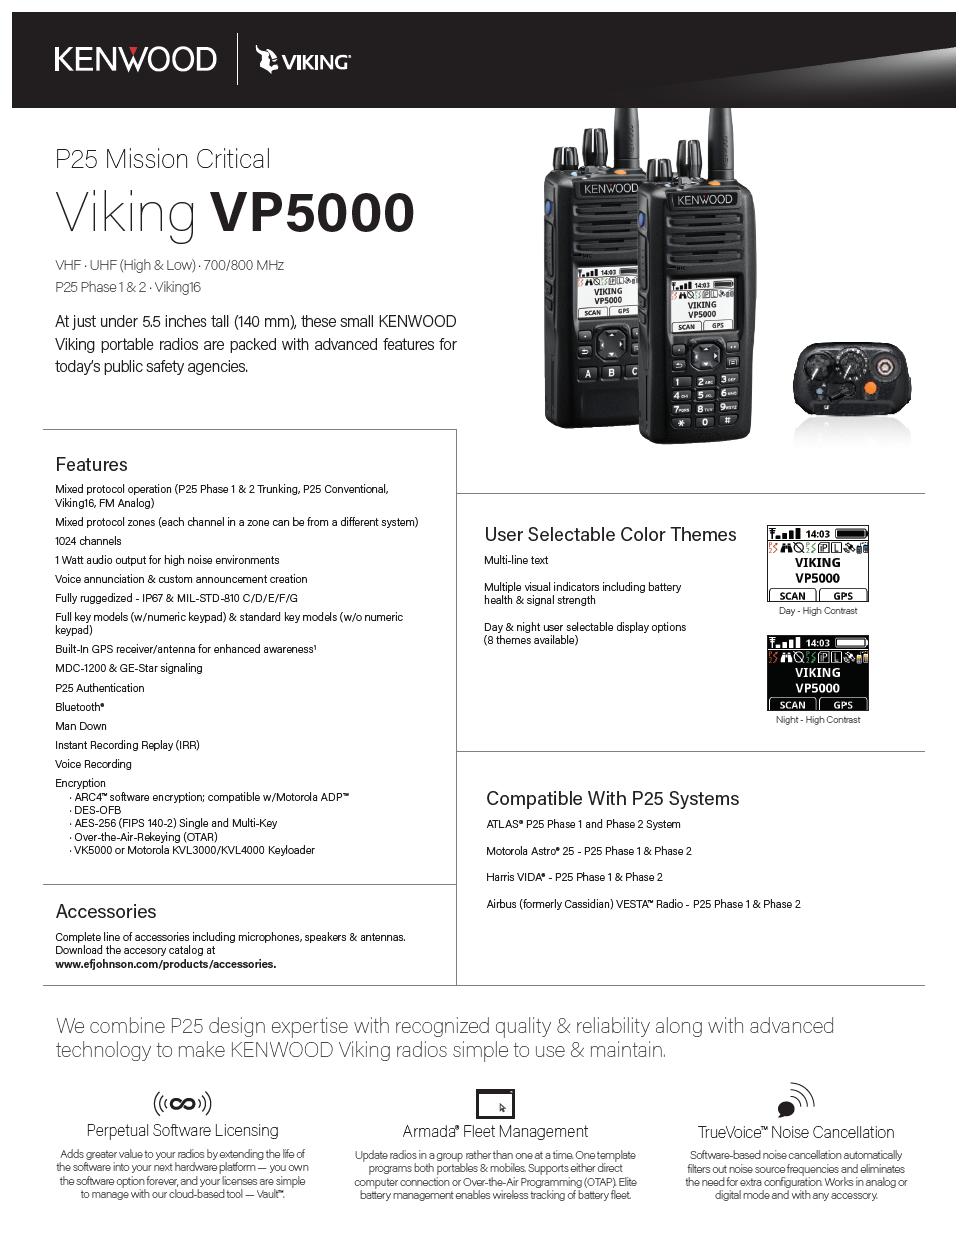 X4A0T KENWOOD Viking Price Guide December 2018 Radio - Base Model VP5430BKF2 700/800 MHz, 762-806 MHz and 806-870 MHz, Black, Model 2 (standard keypad) $ 1,555.00 $ 1,244.